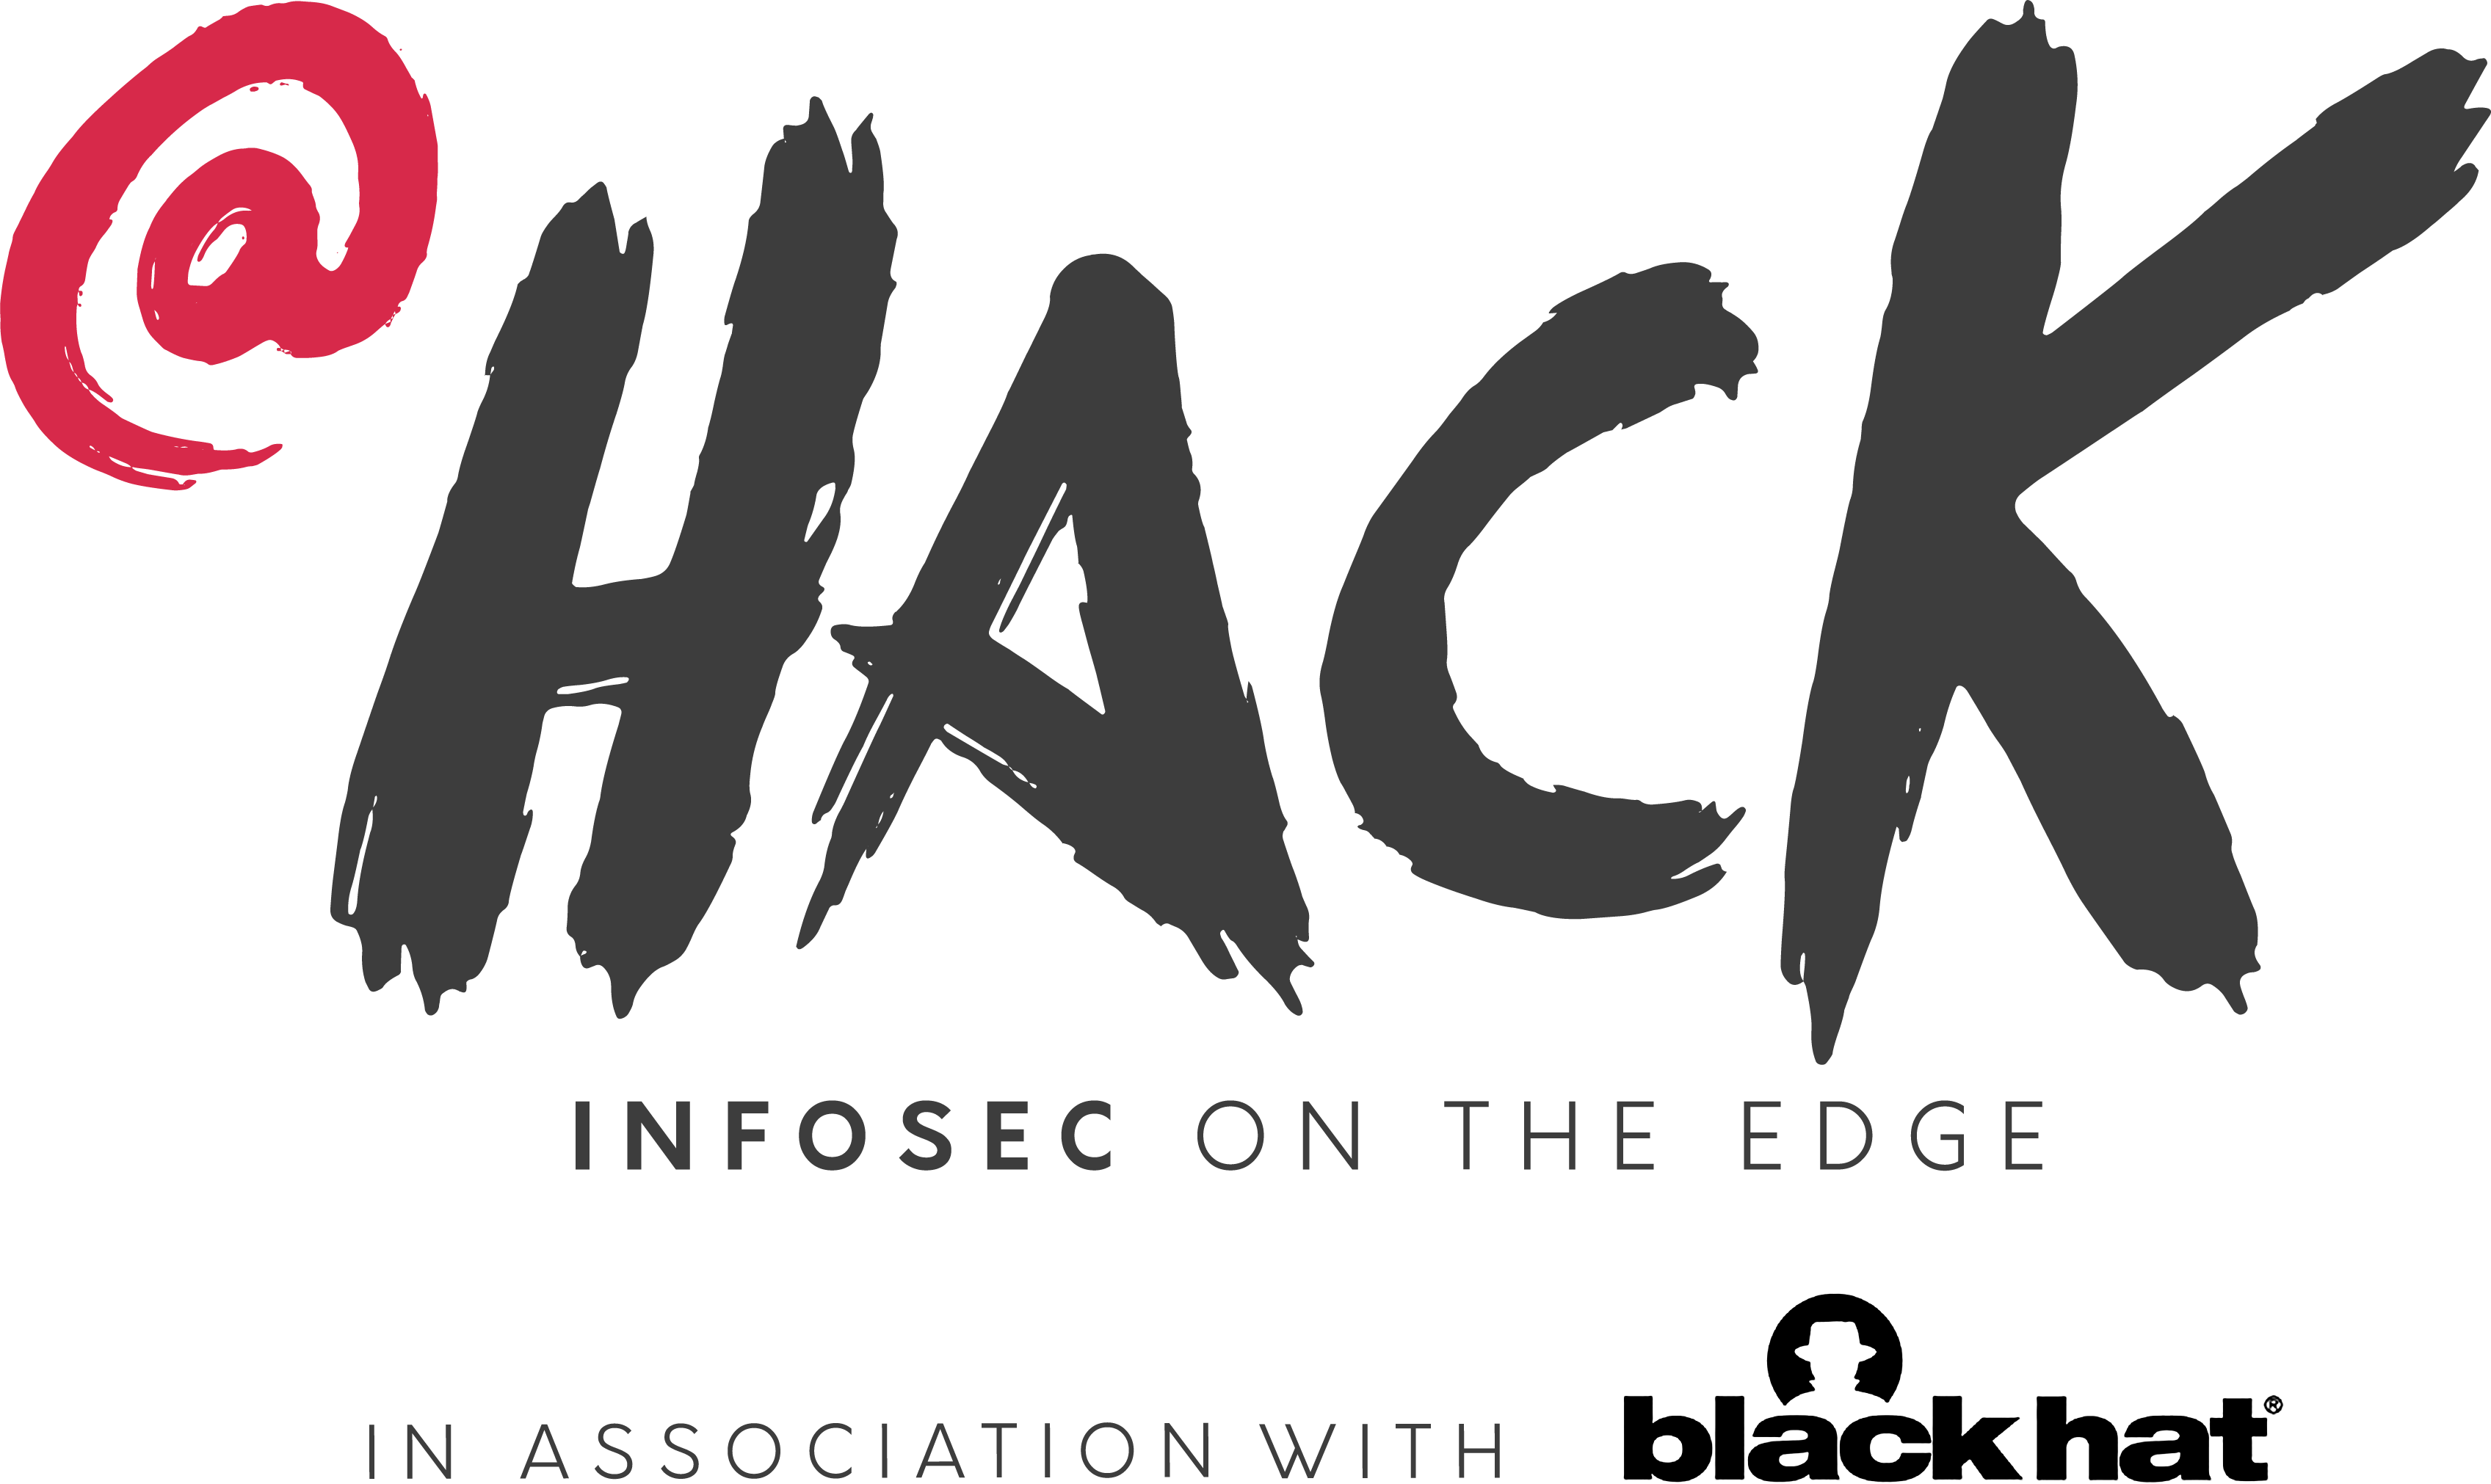 @Hack: Infosec on the edge